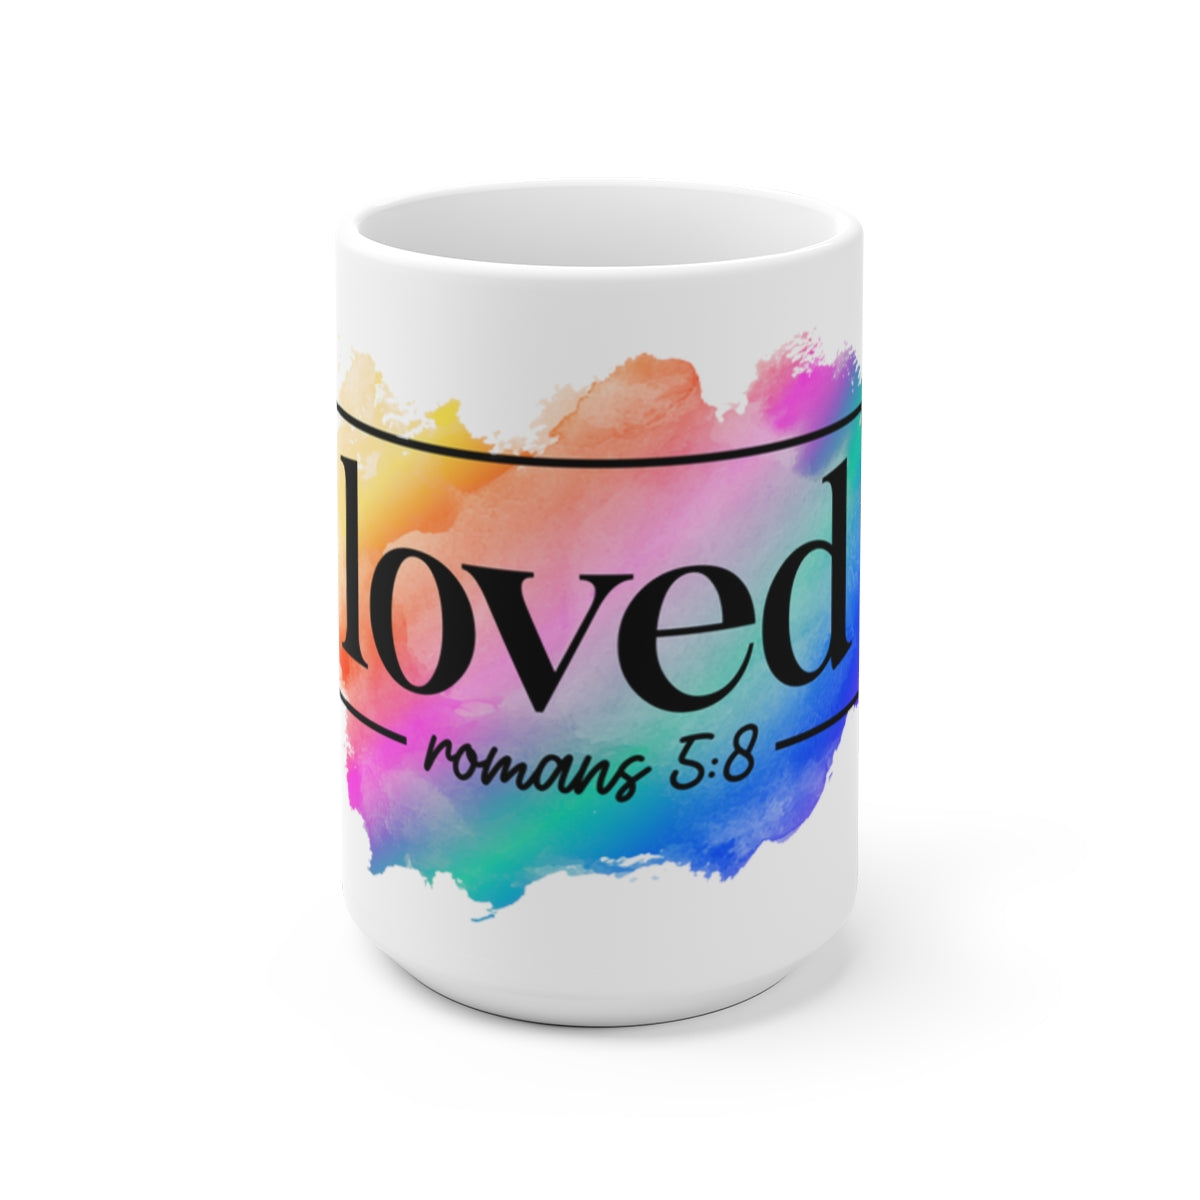 Loved Set (Coffee mug & Journal)